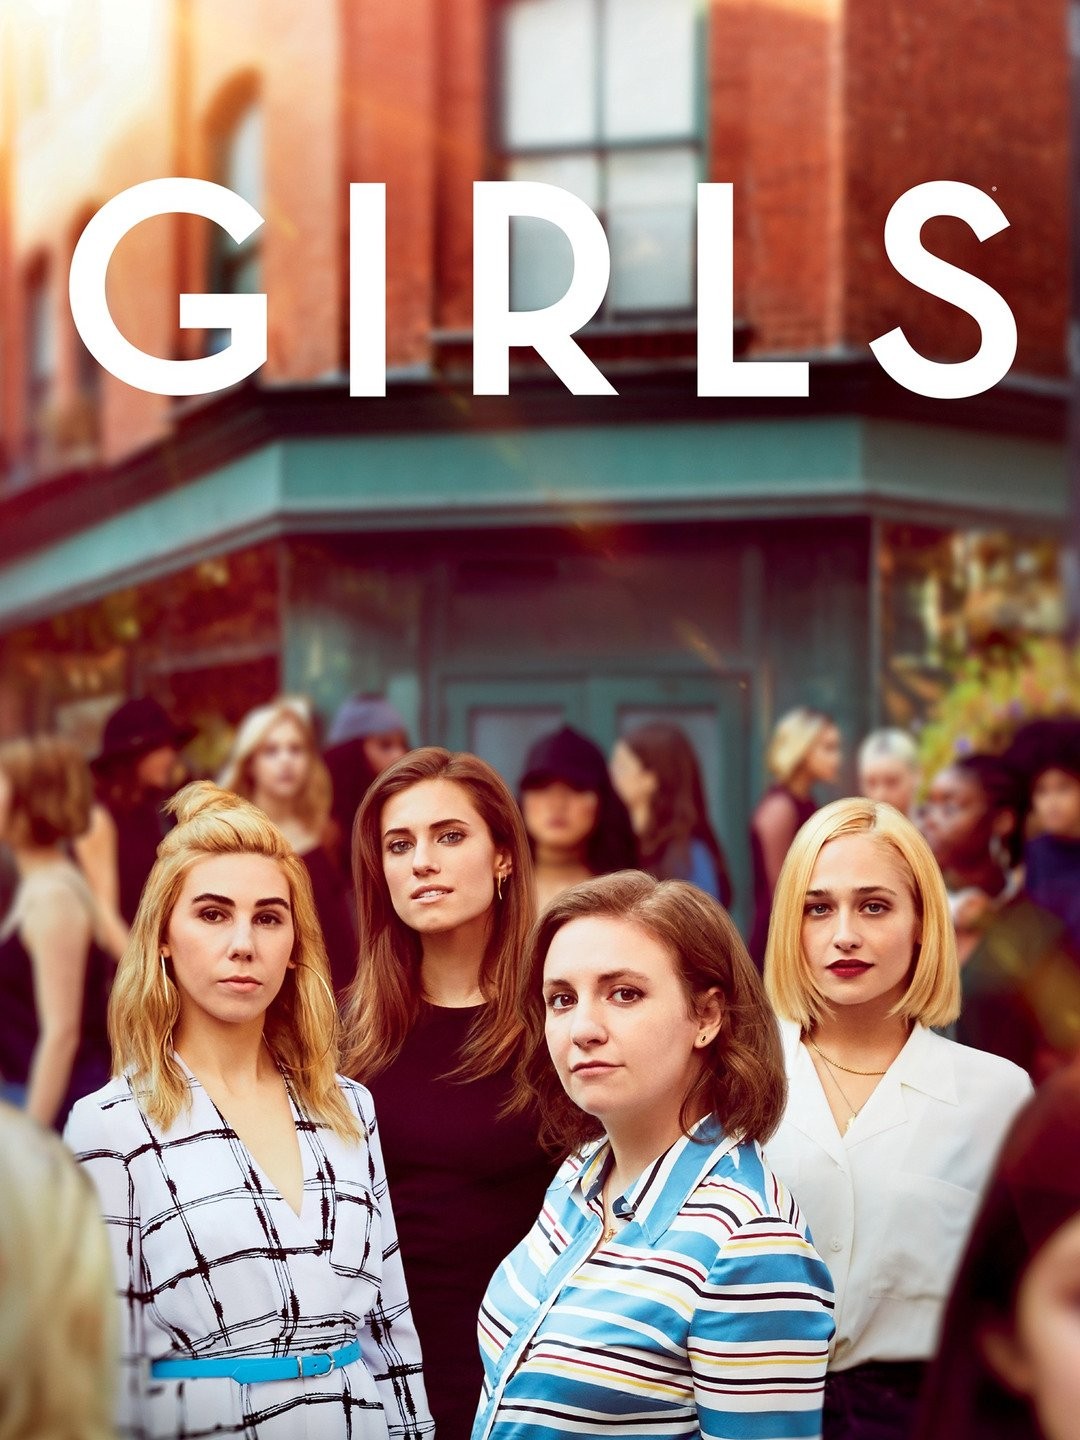 Good Girls - Rotten Tomatoes